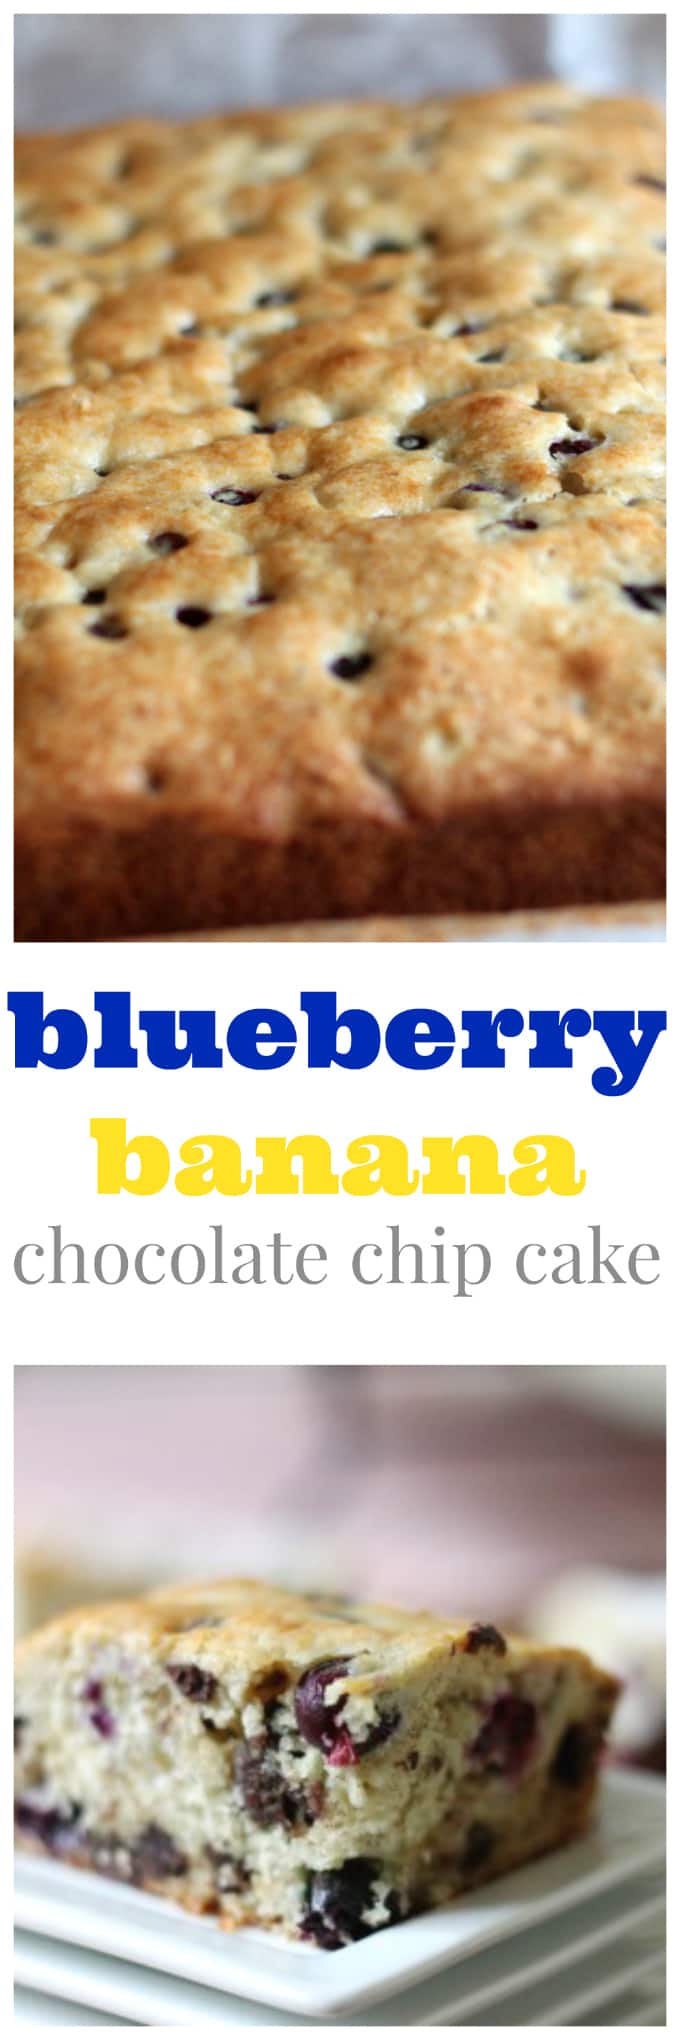 blueberry banana chocolate chip cake